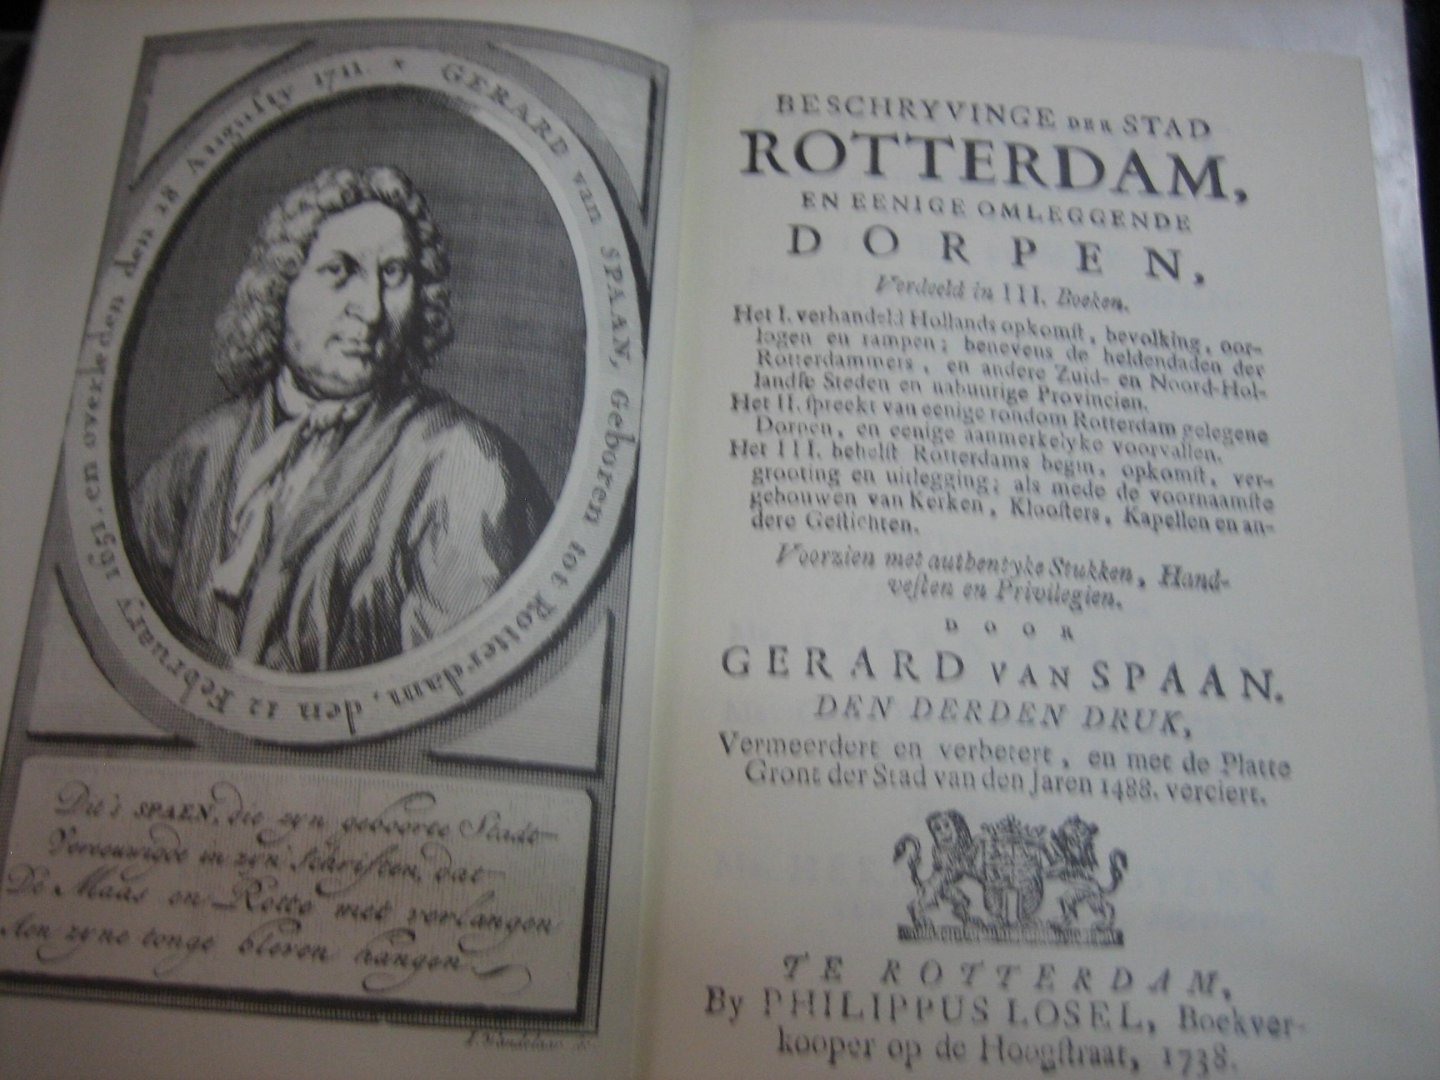 G. van Spaan - Beschrijvinge der stad Rotterdam